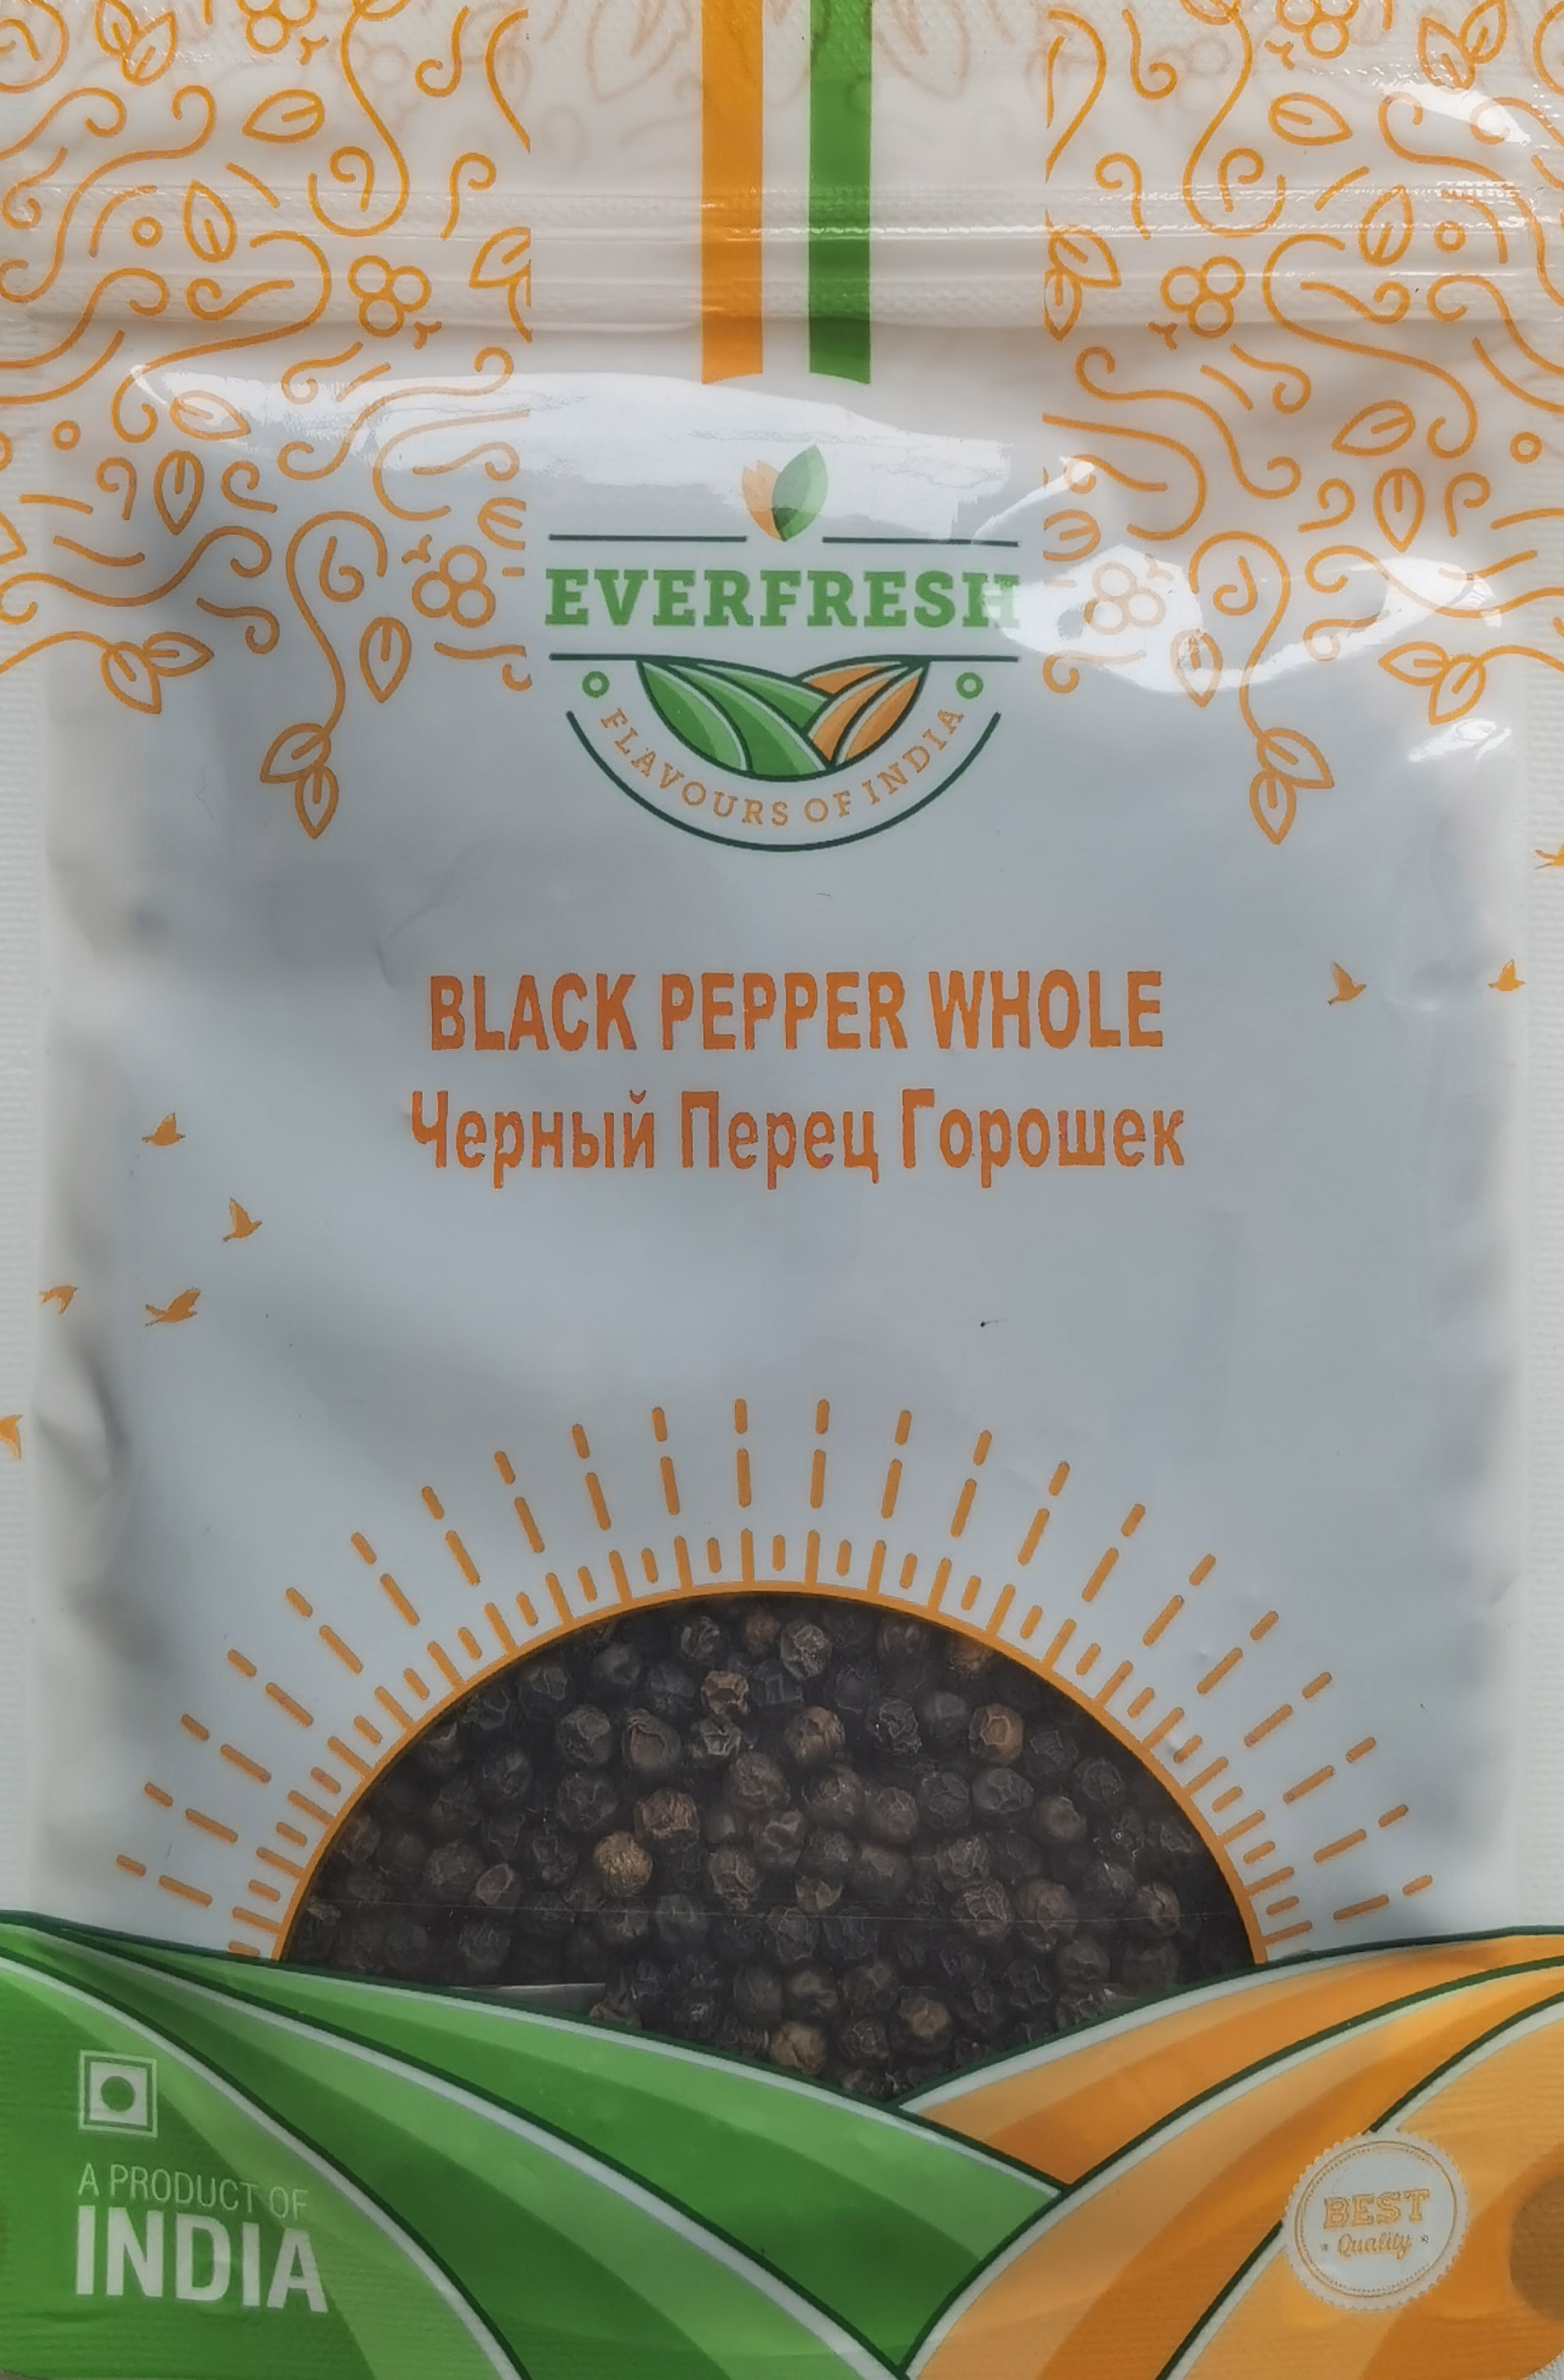 BLACK PEPPER WHOLE, Everfresh (ЧЁРНЫЙ ПЕРЕЦ ГОРОШЕК, Эверфреш), 50 г.